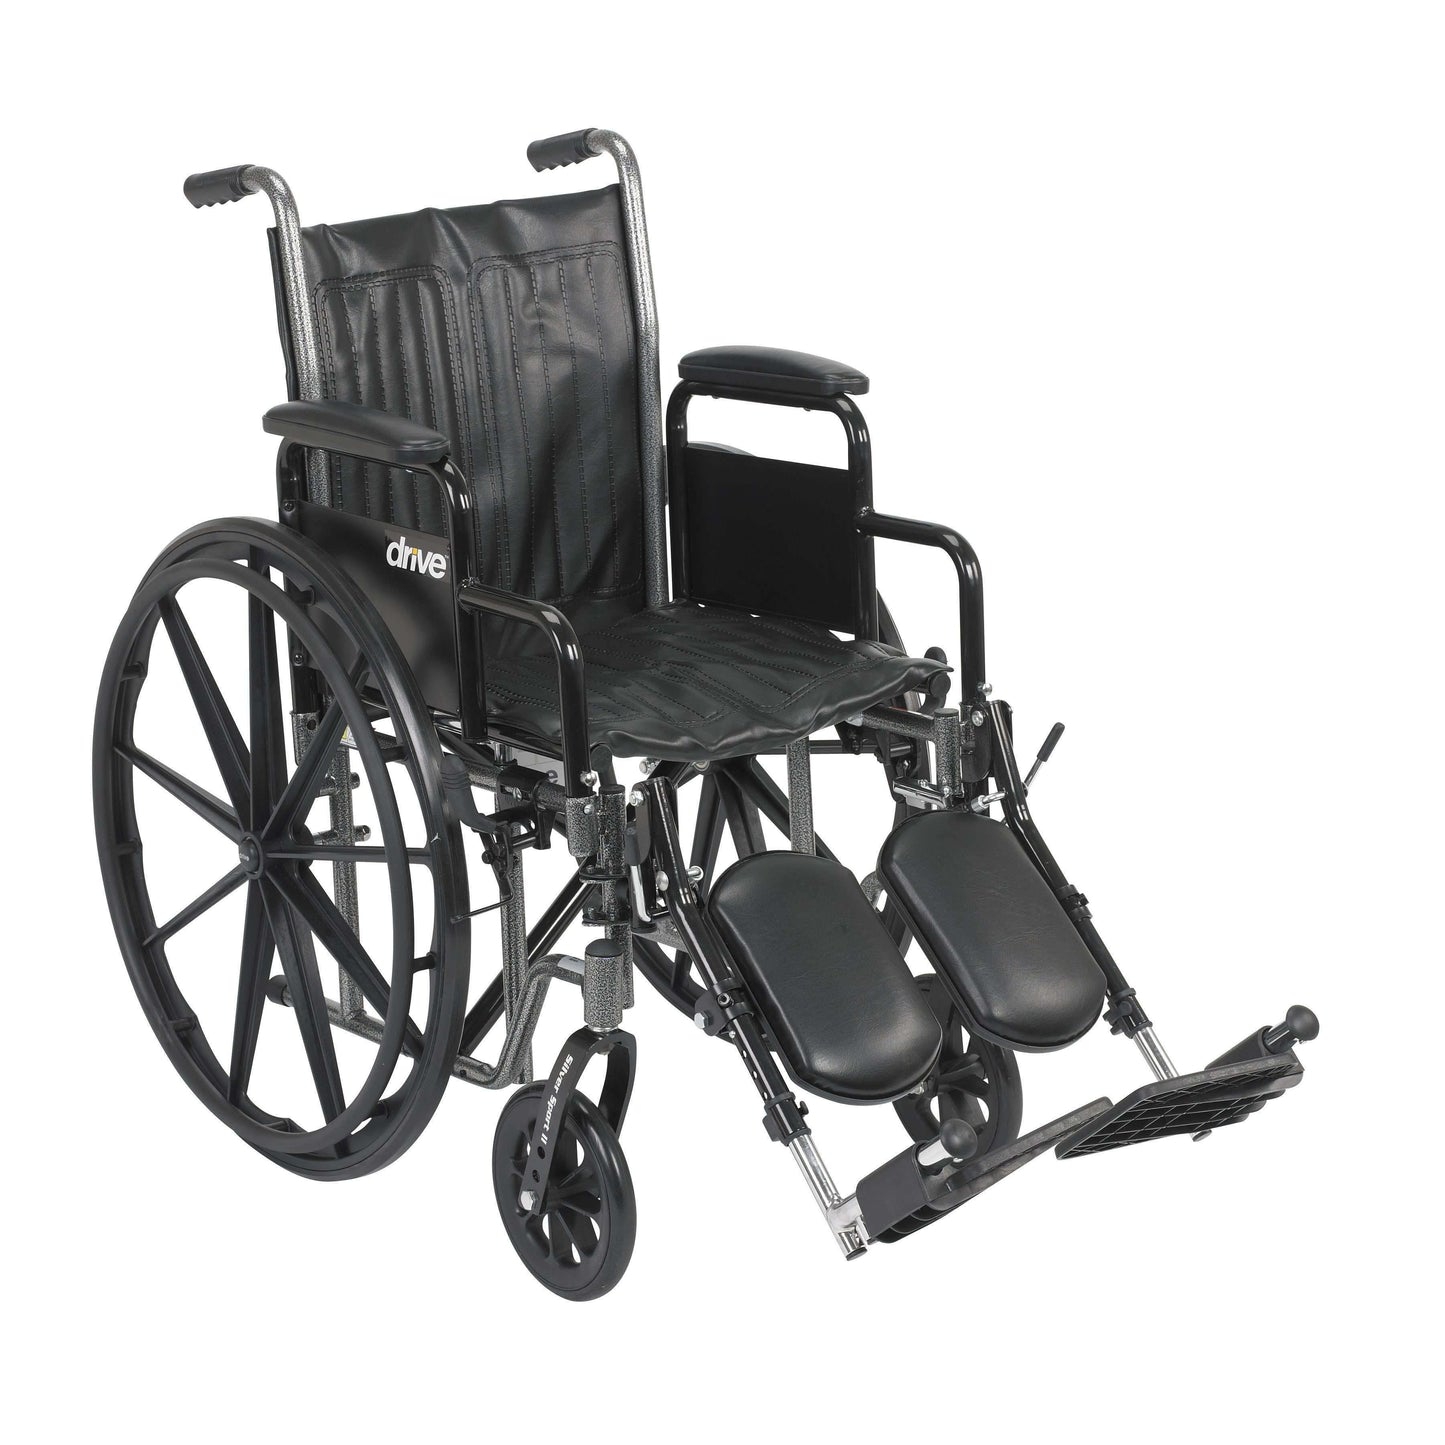 Drive ssp216dda-elr Silver Sport 2 Wheelchair, Detachable Desk Arms, Elevating Leg Rests, 16" Seat